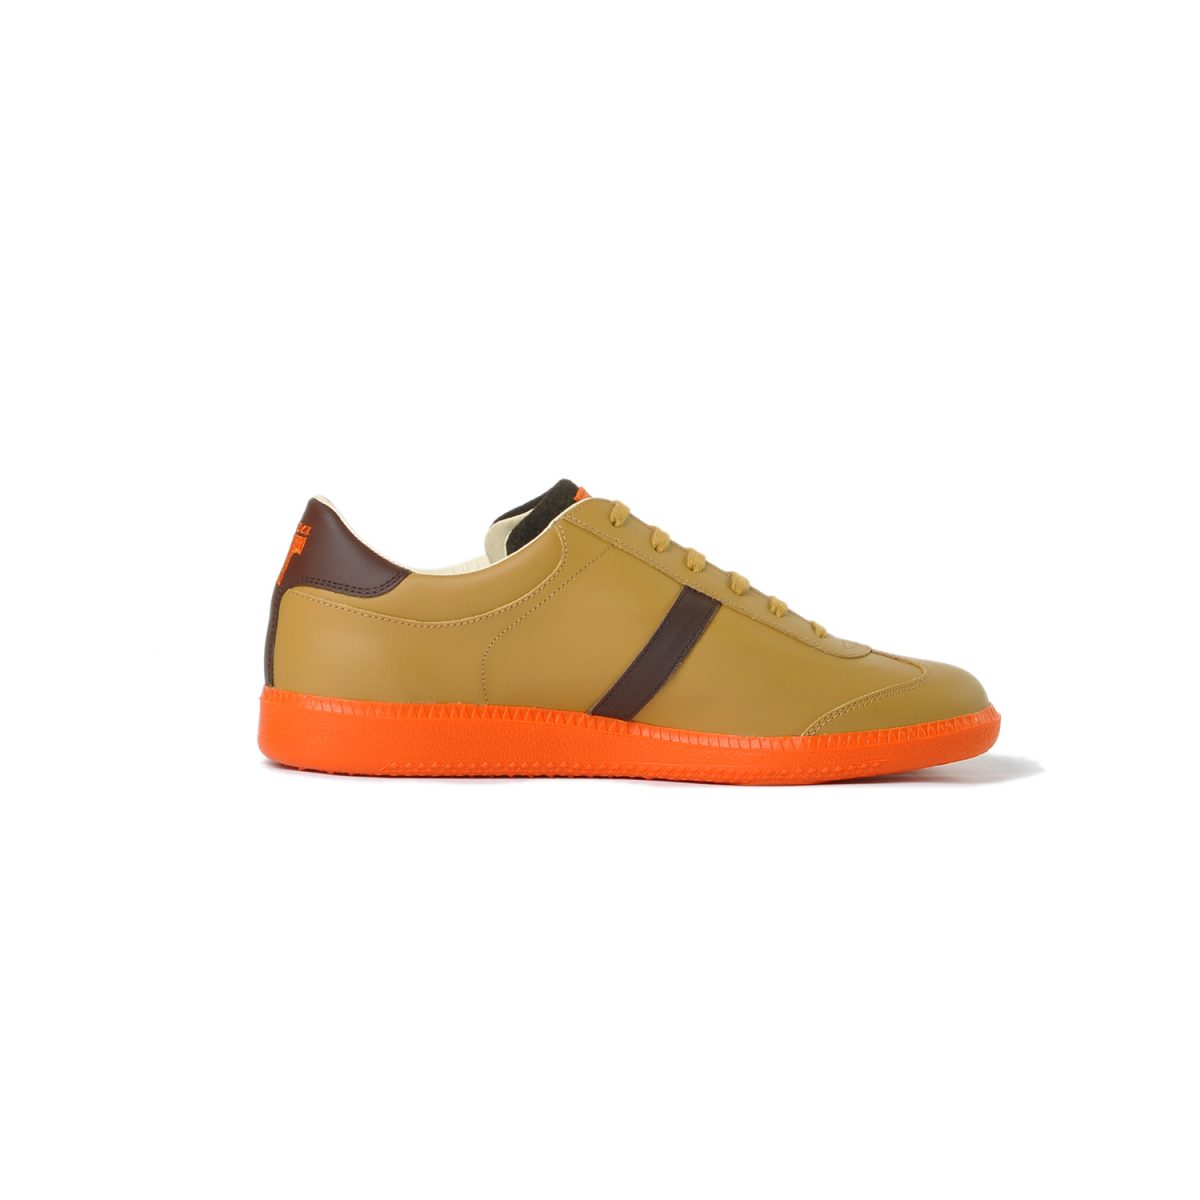 Tisza shoes - Compakt - Sand-brown